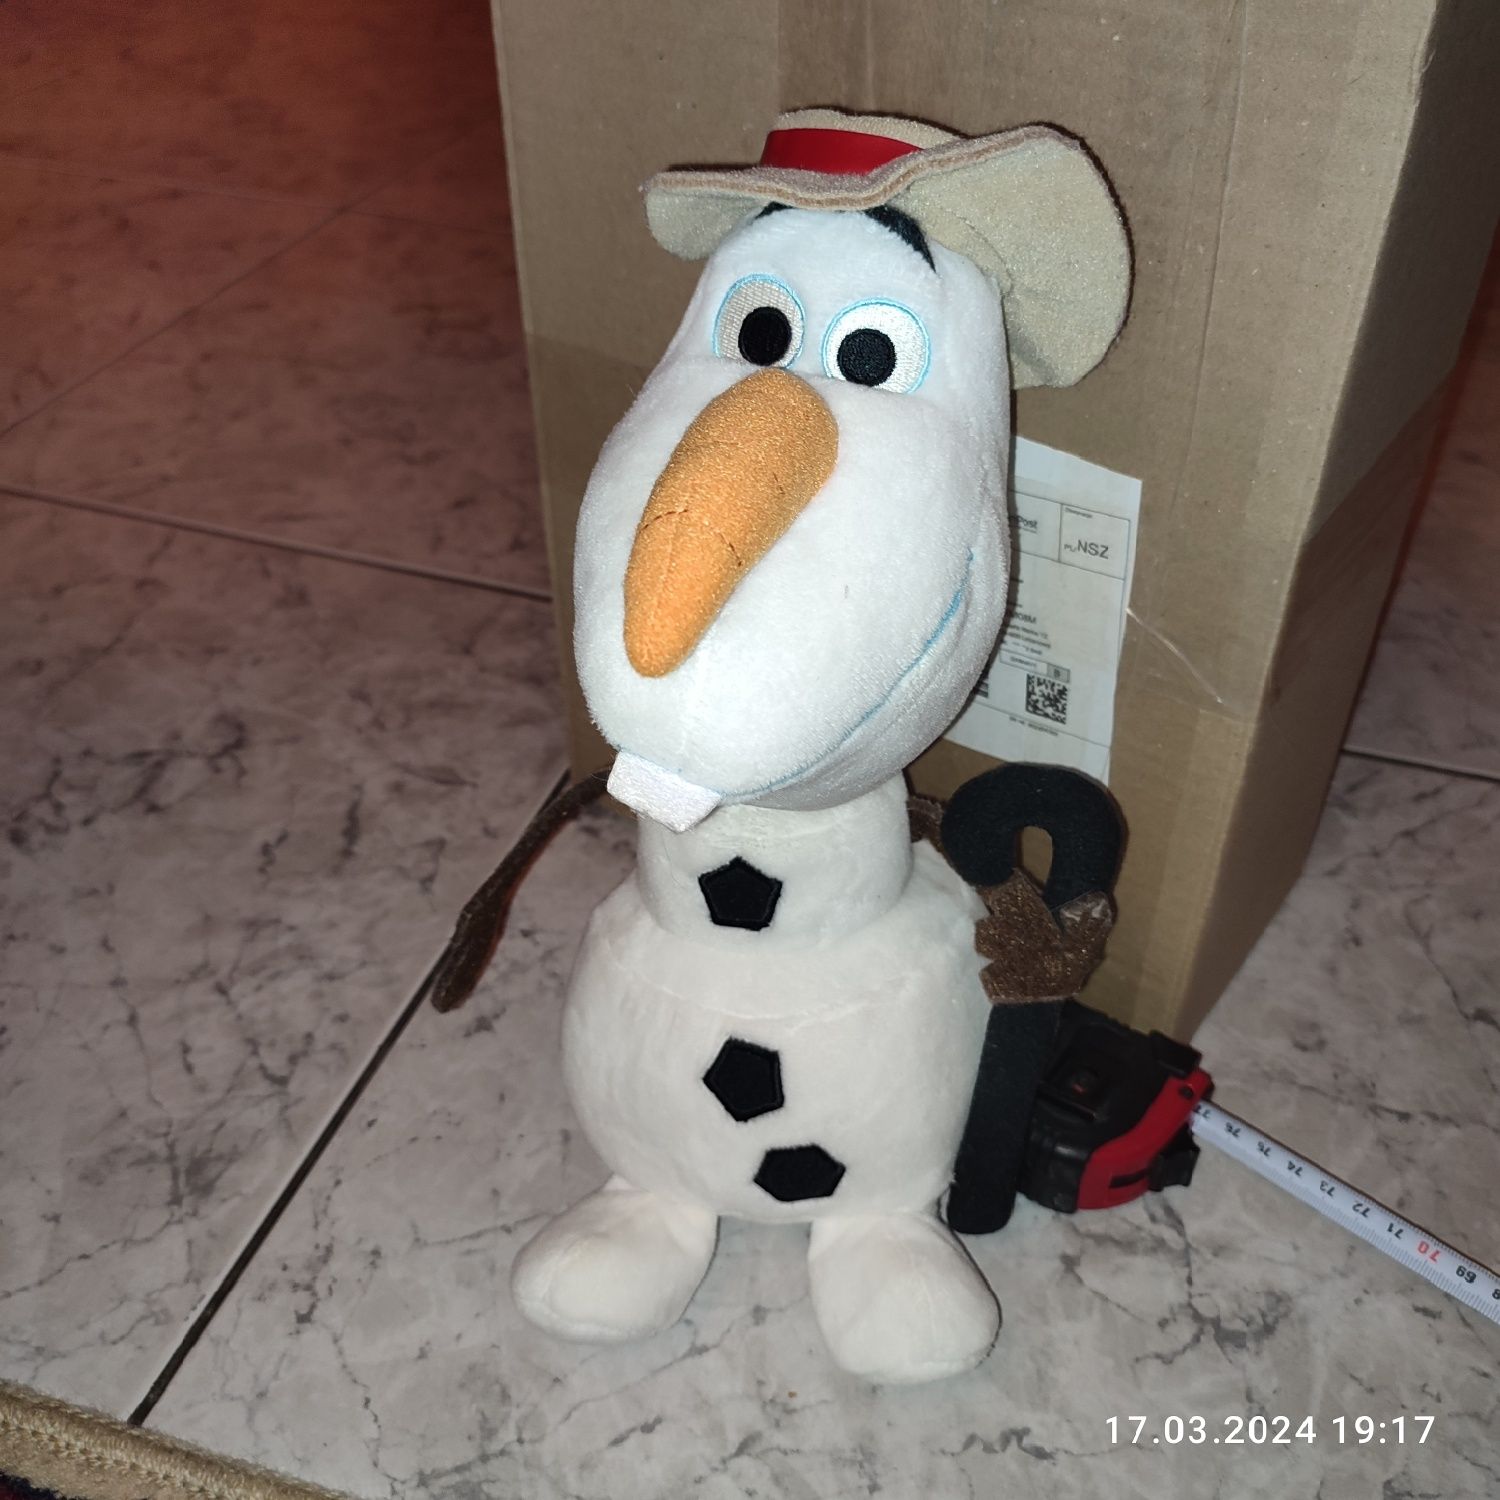 maskotka Olaf z krainy lodu ok 31 cm
Frozen